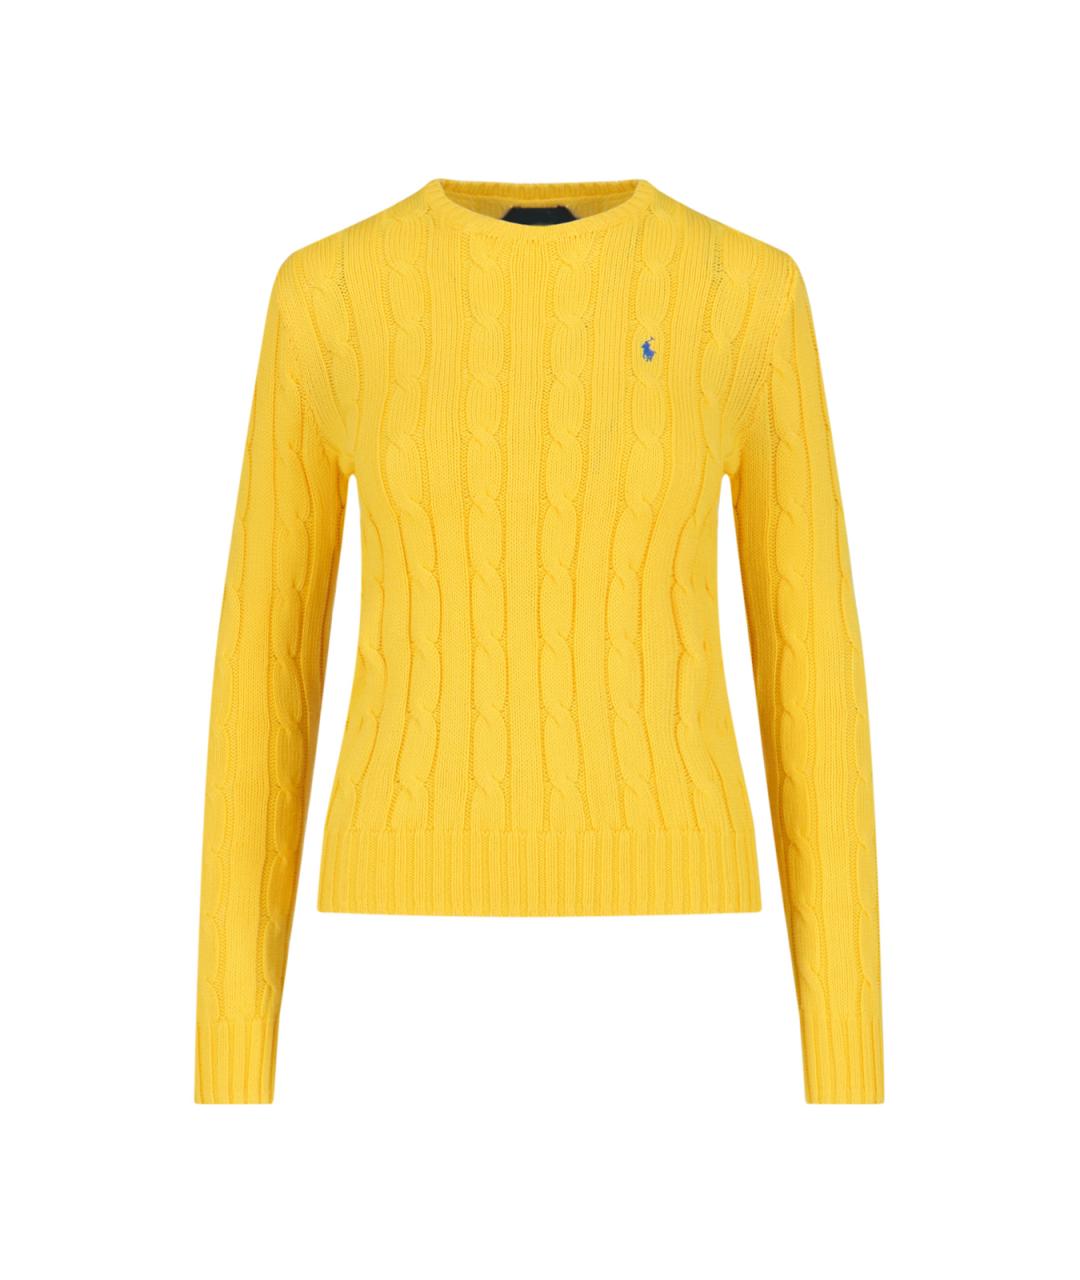 POLO RALPH LAUREN Желтый хлопковый джемпер / свитер, фото 1